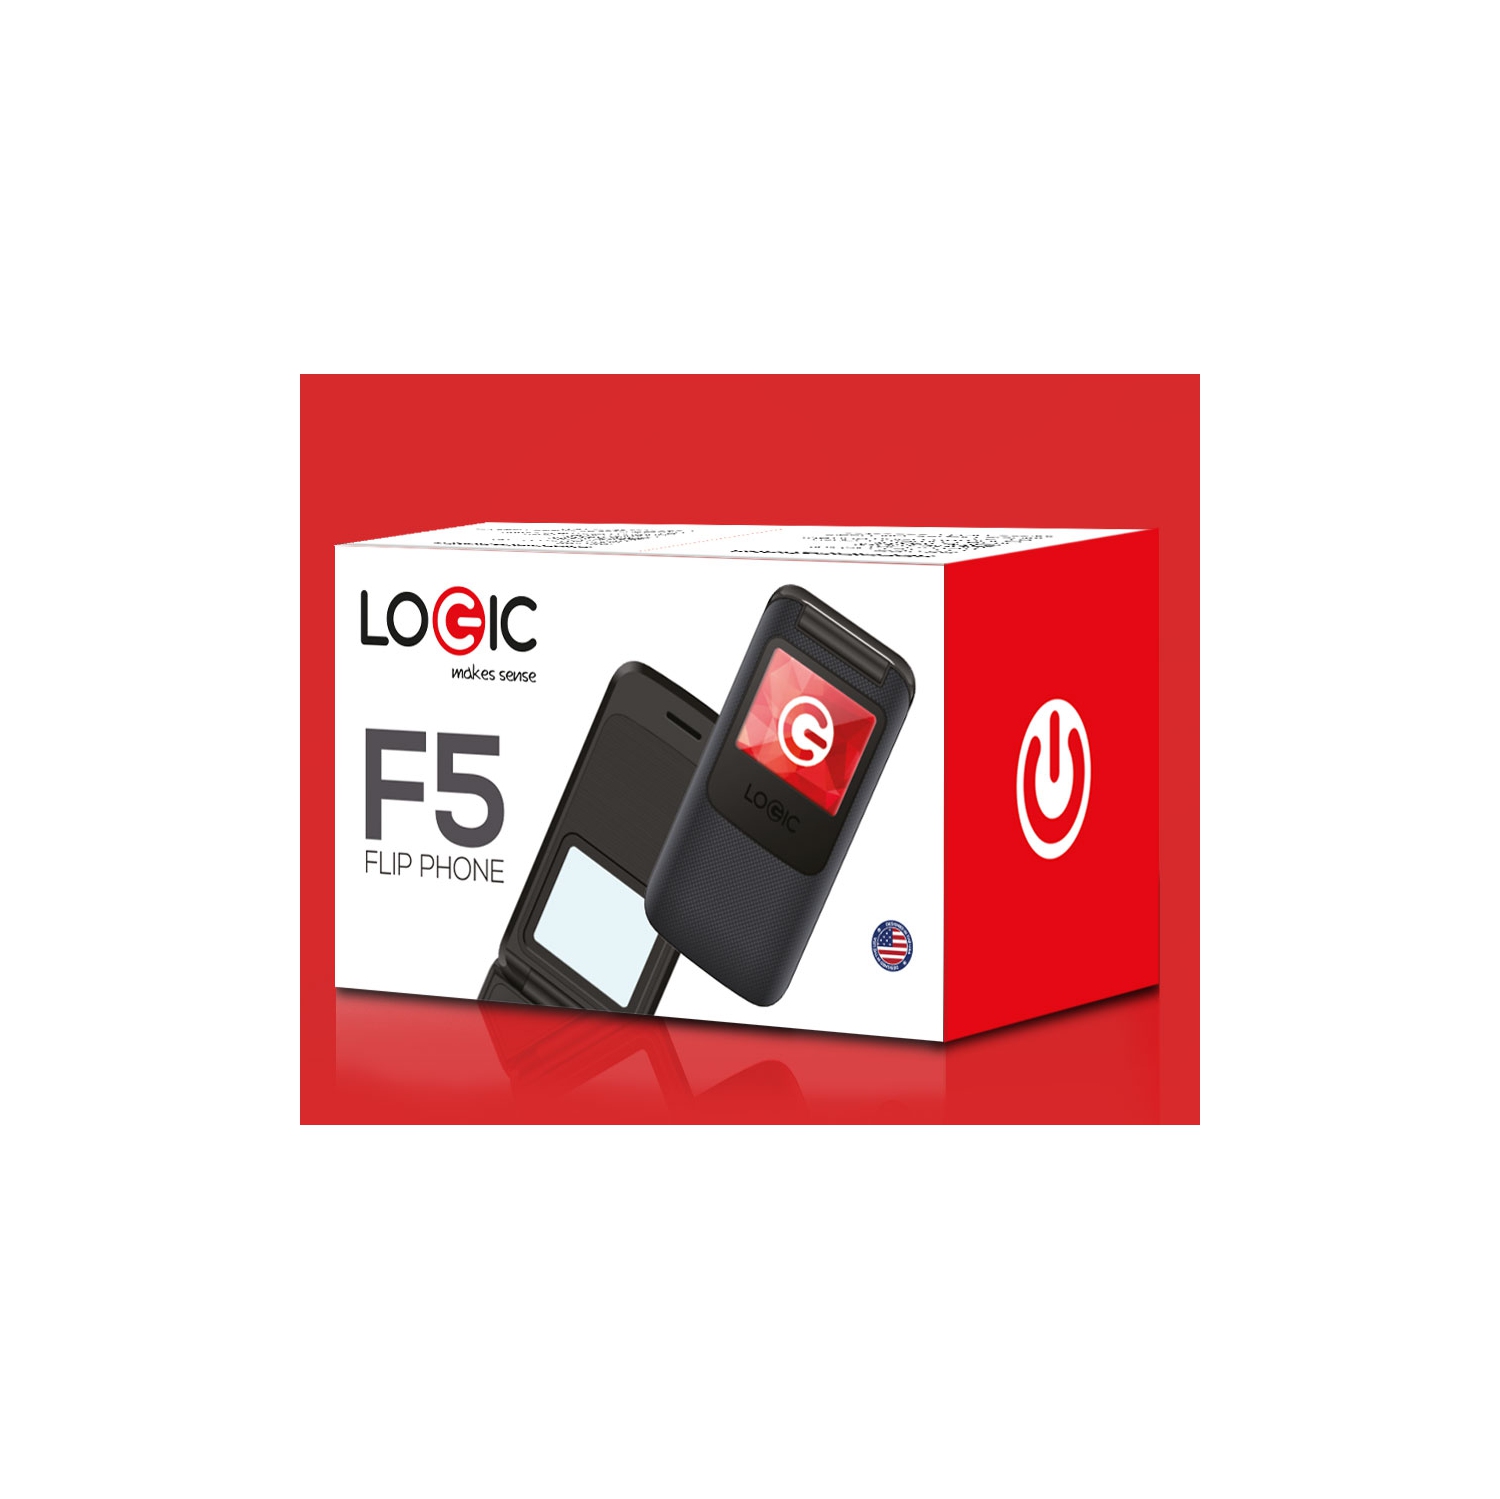 Logic F5 Flip Phone 32MB - GSM Unlocked Smartphone - International Model - Brand New - Charcoal